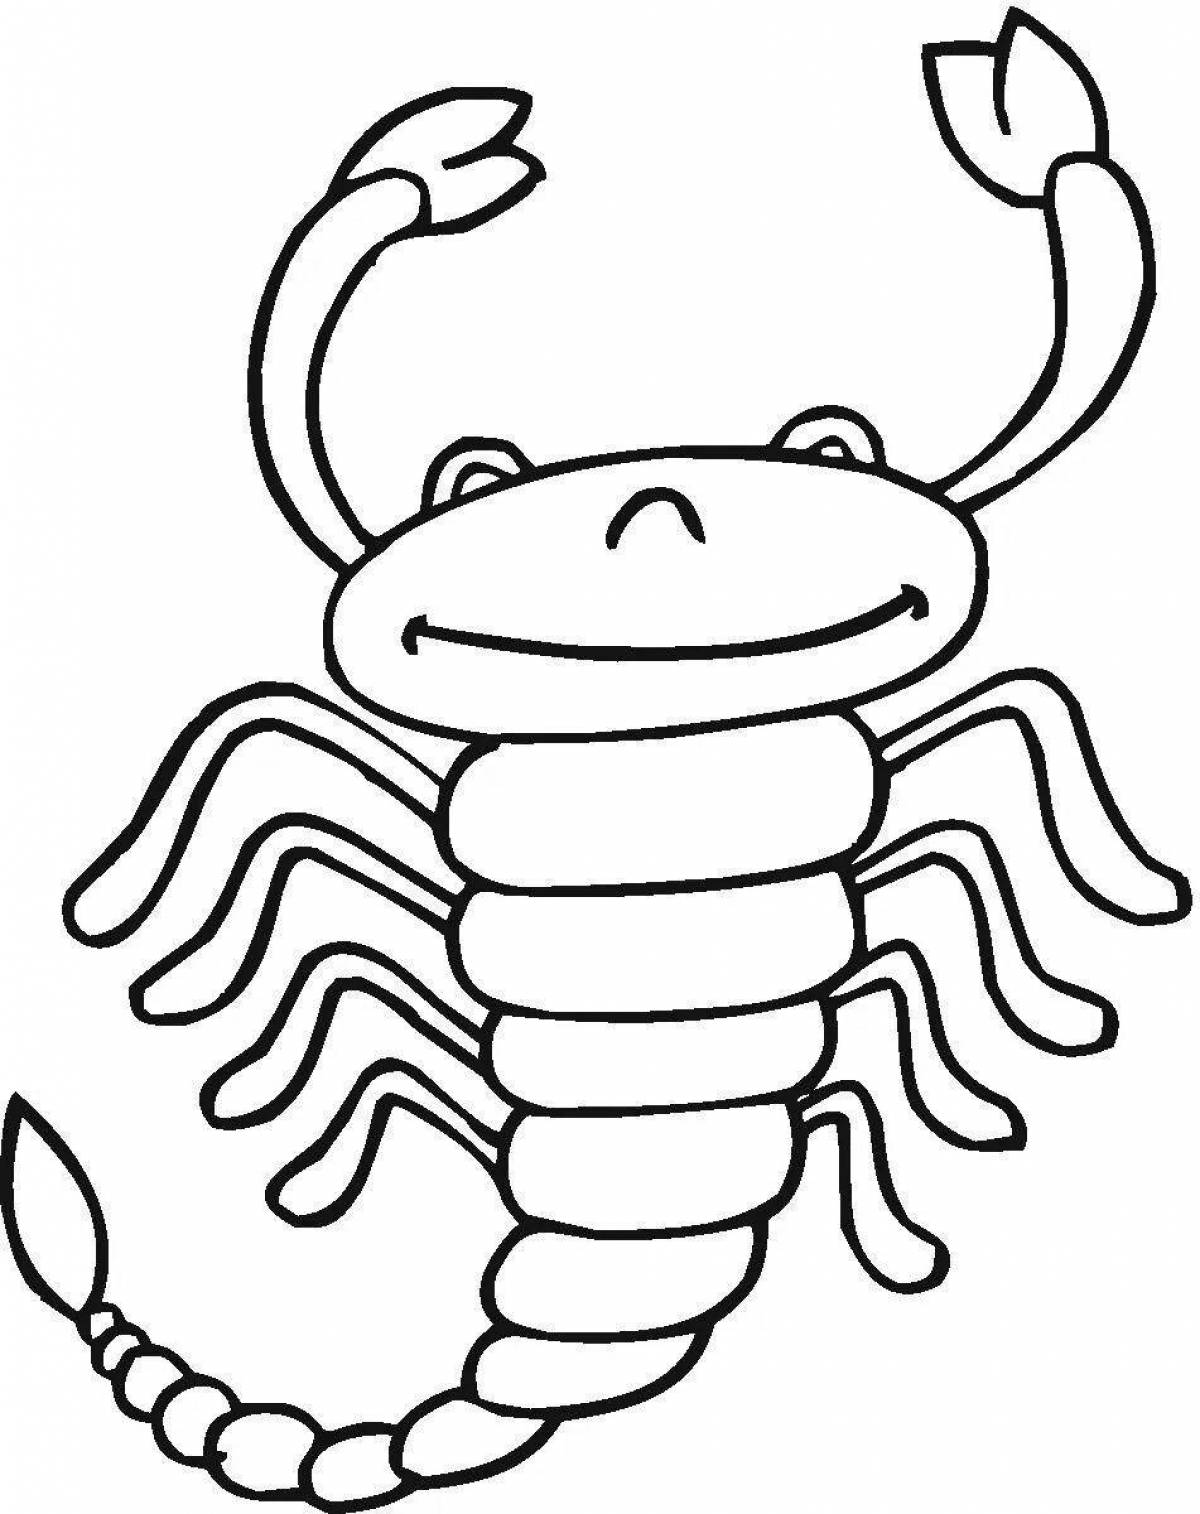 Scorpion glitter coloring book for kids